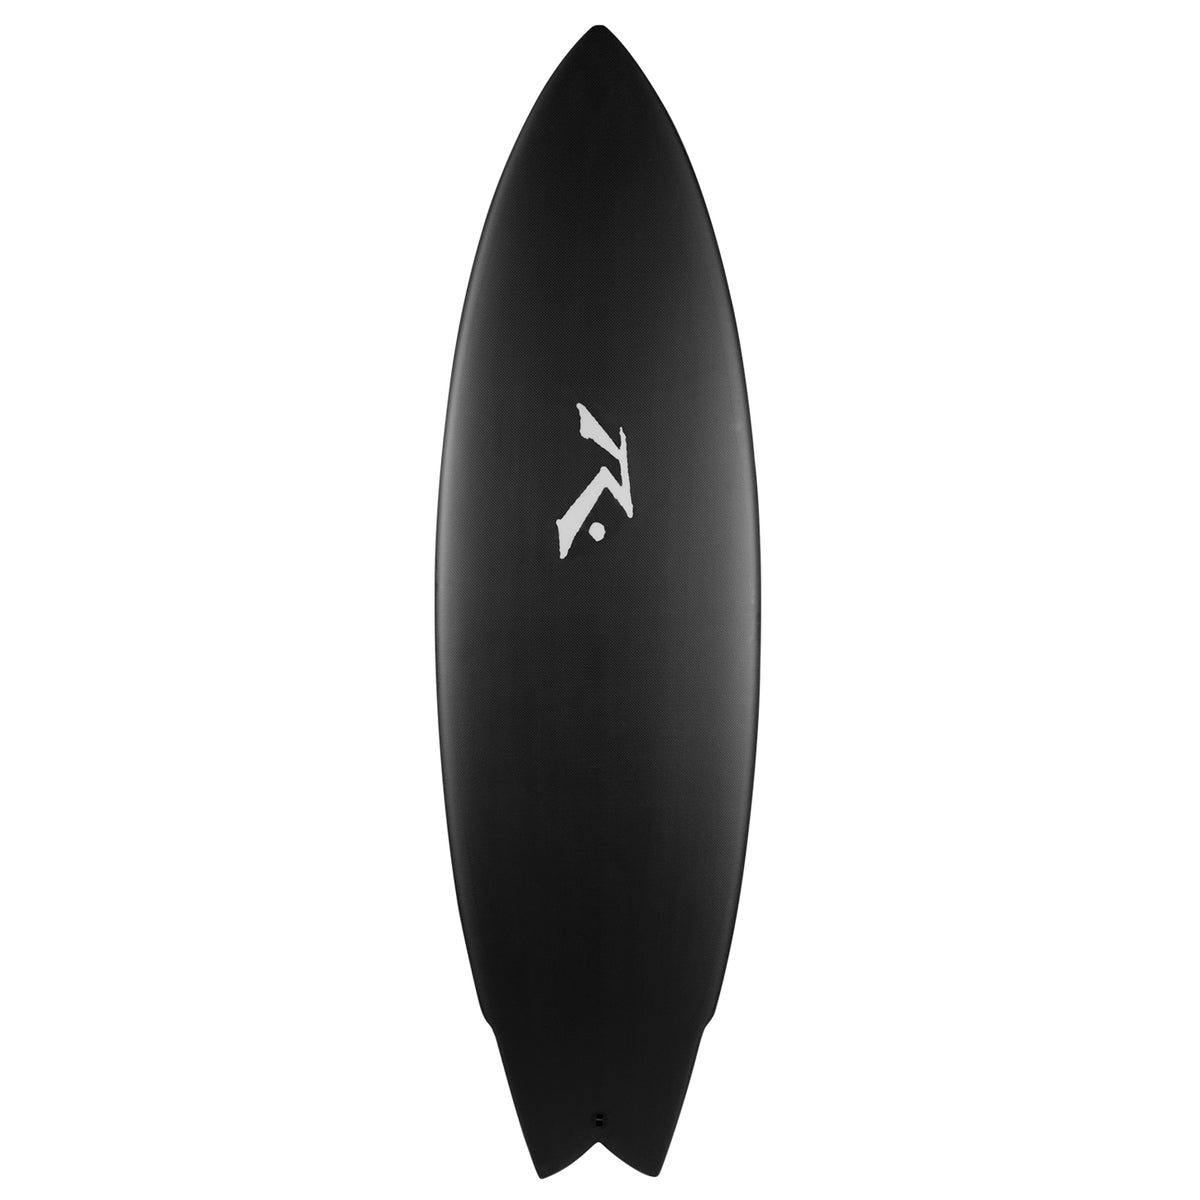 The Deuce Performance Twin Fin Surfboard - Rusty Surfboards + Noel Salas Collaboration - Deck View - Dark Arts Carbon Construction